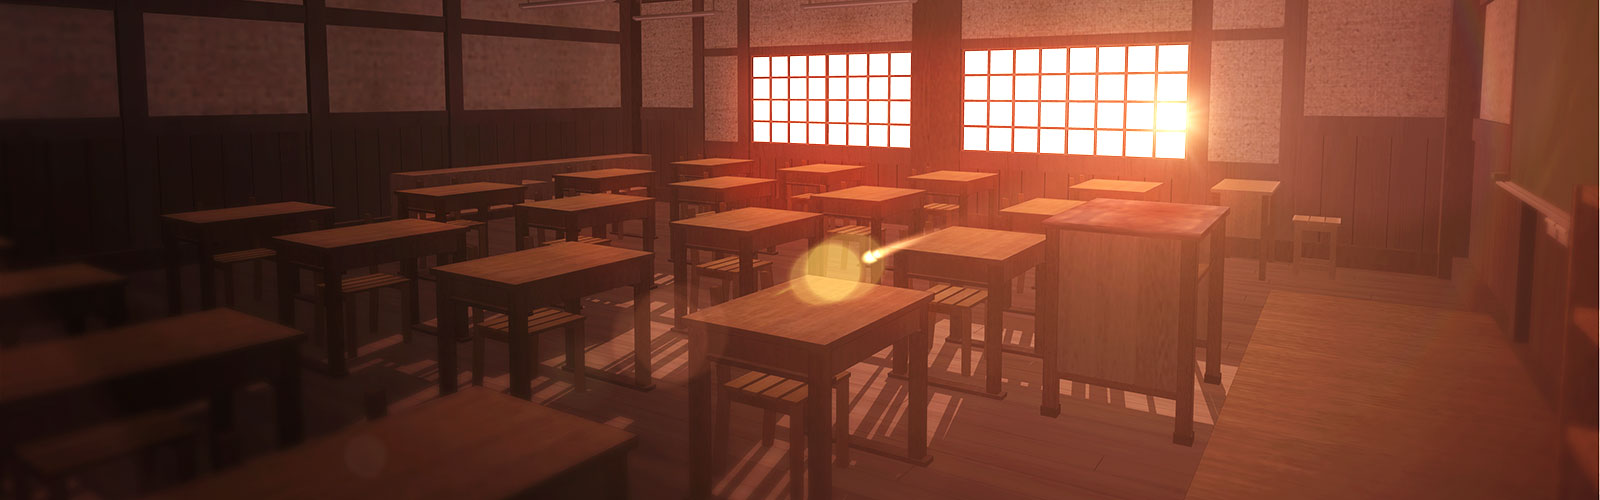 3Dオブジェクト_木造の学校校舎と教室